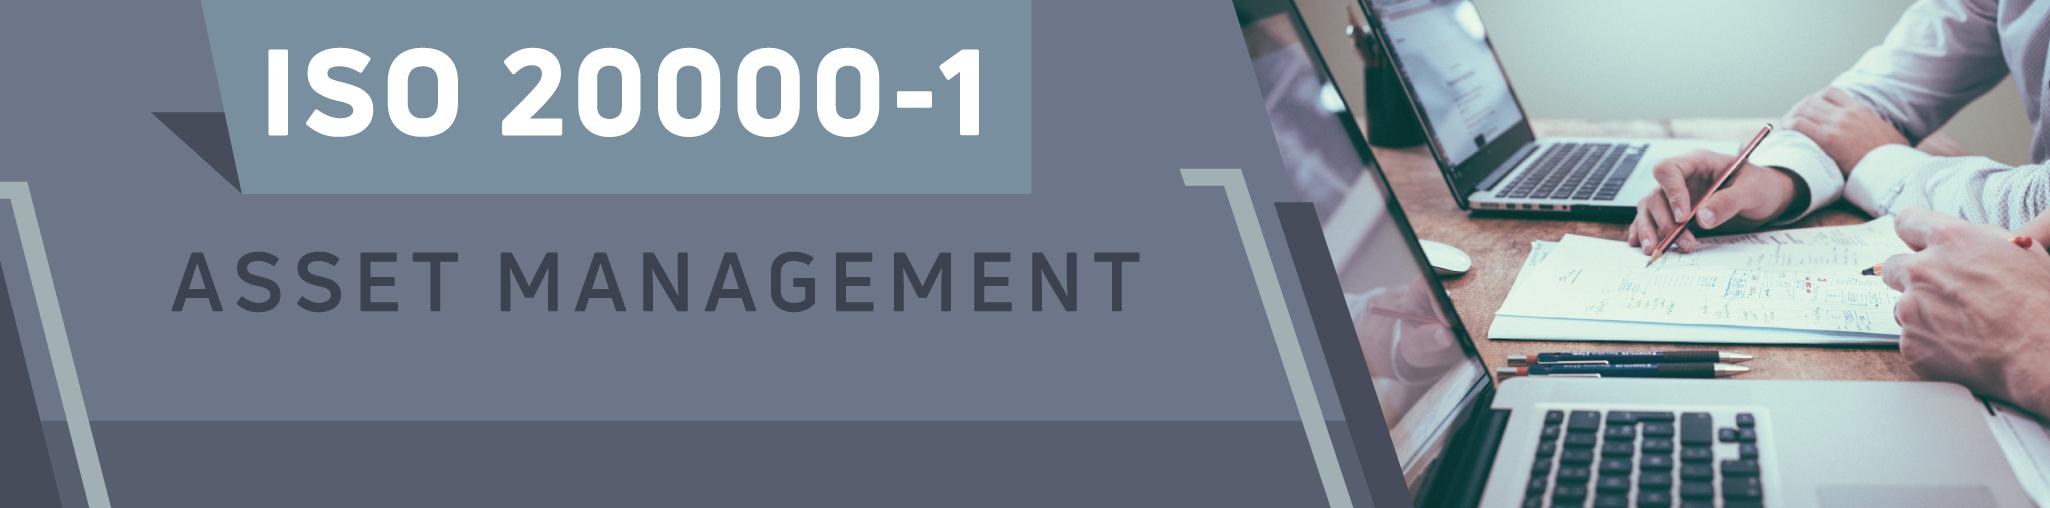 ISO 20000-1 Asset Management